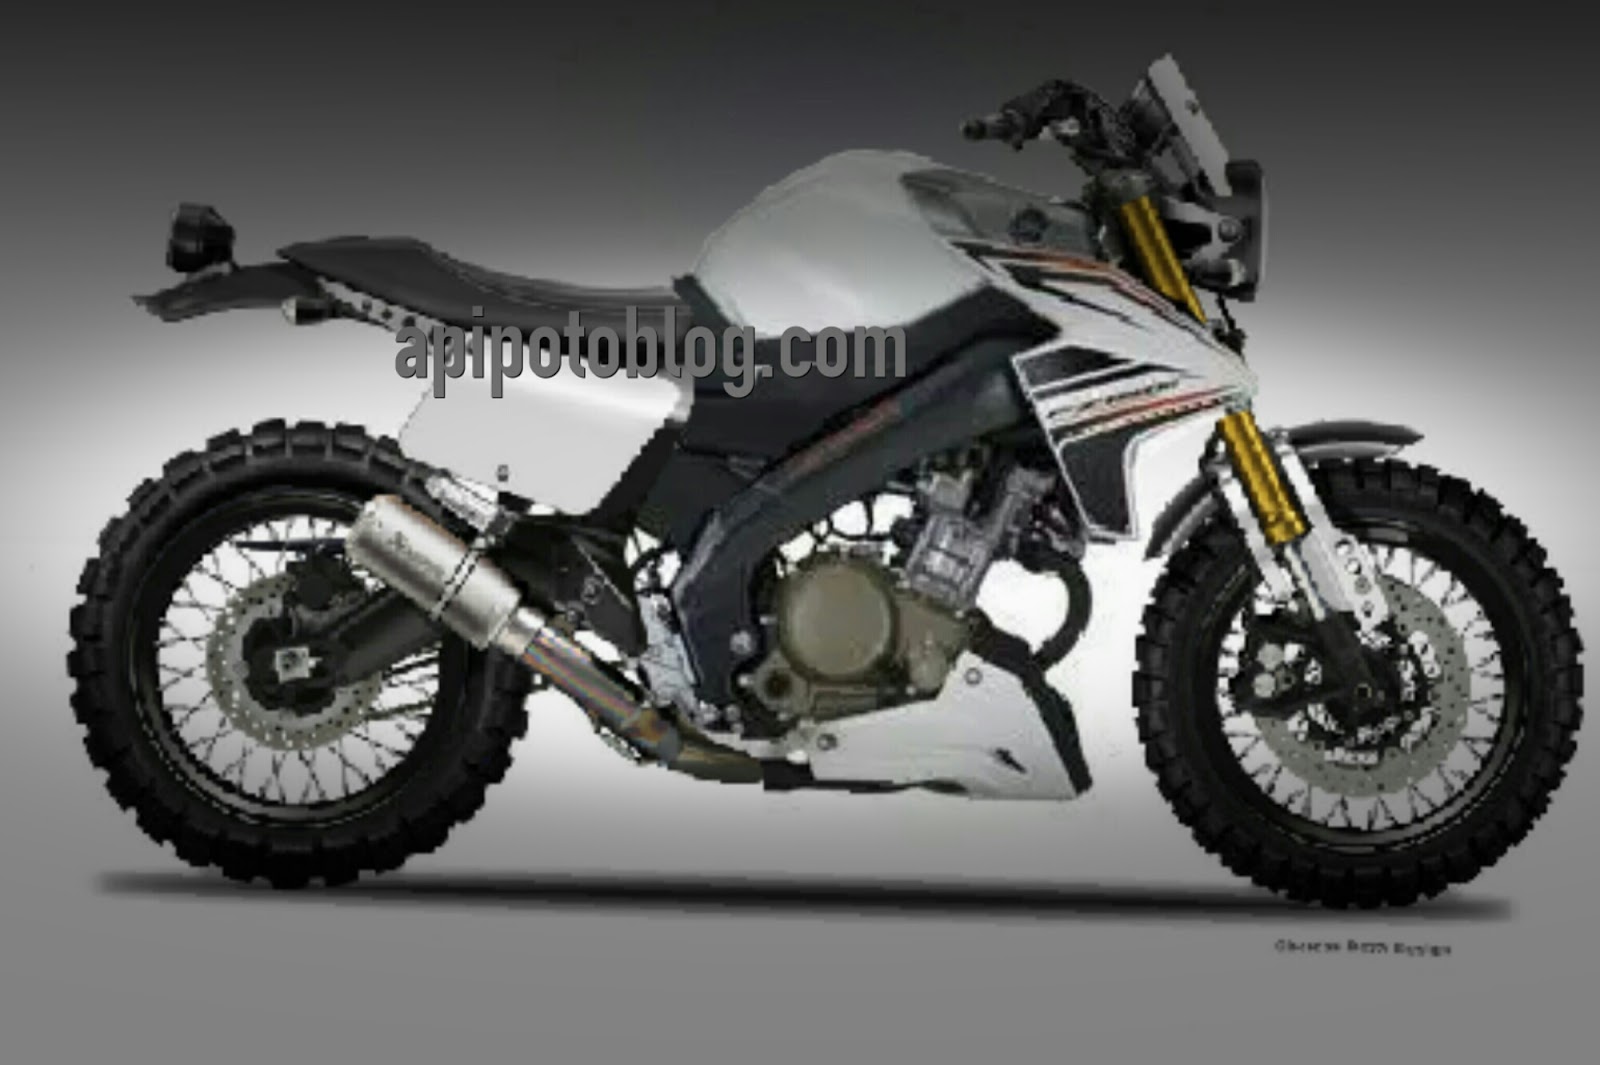 Yamaha Vixion Modif Honda Cb Foto Modifikasi Motor Terbaru